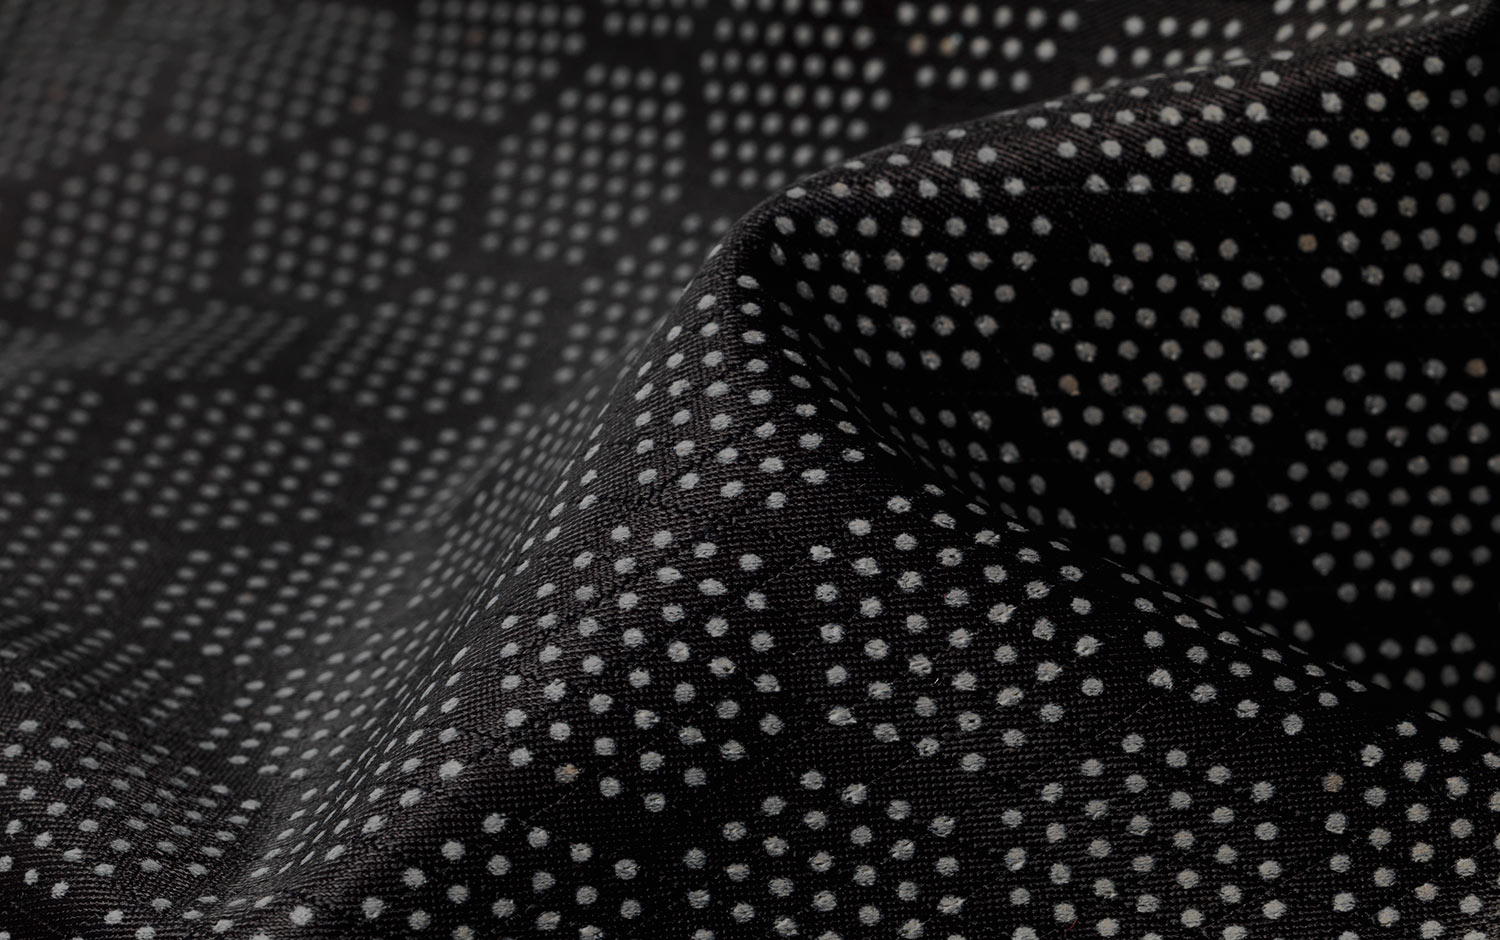 Ceramic Dots on a fabric